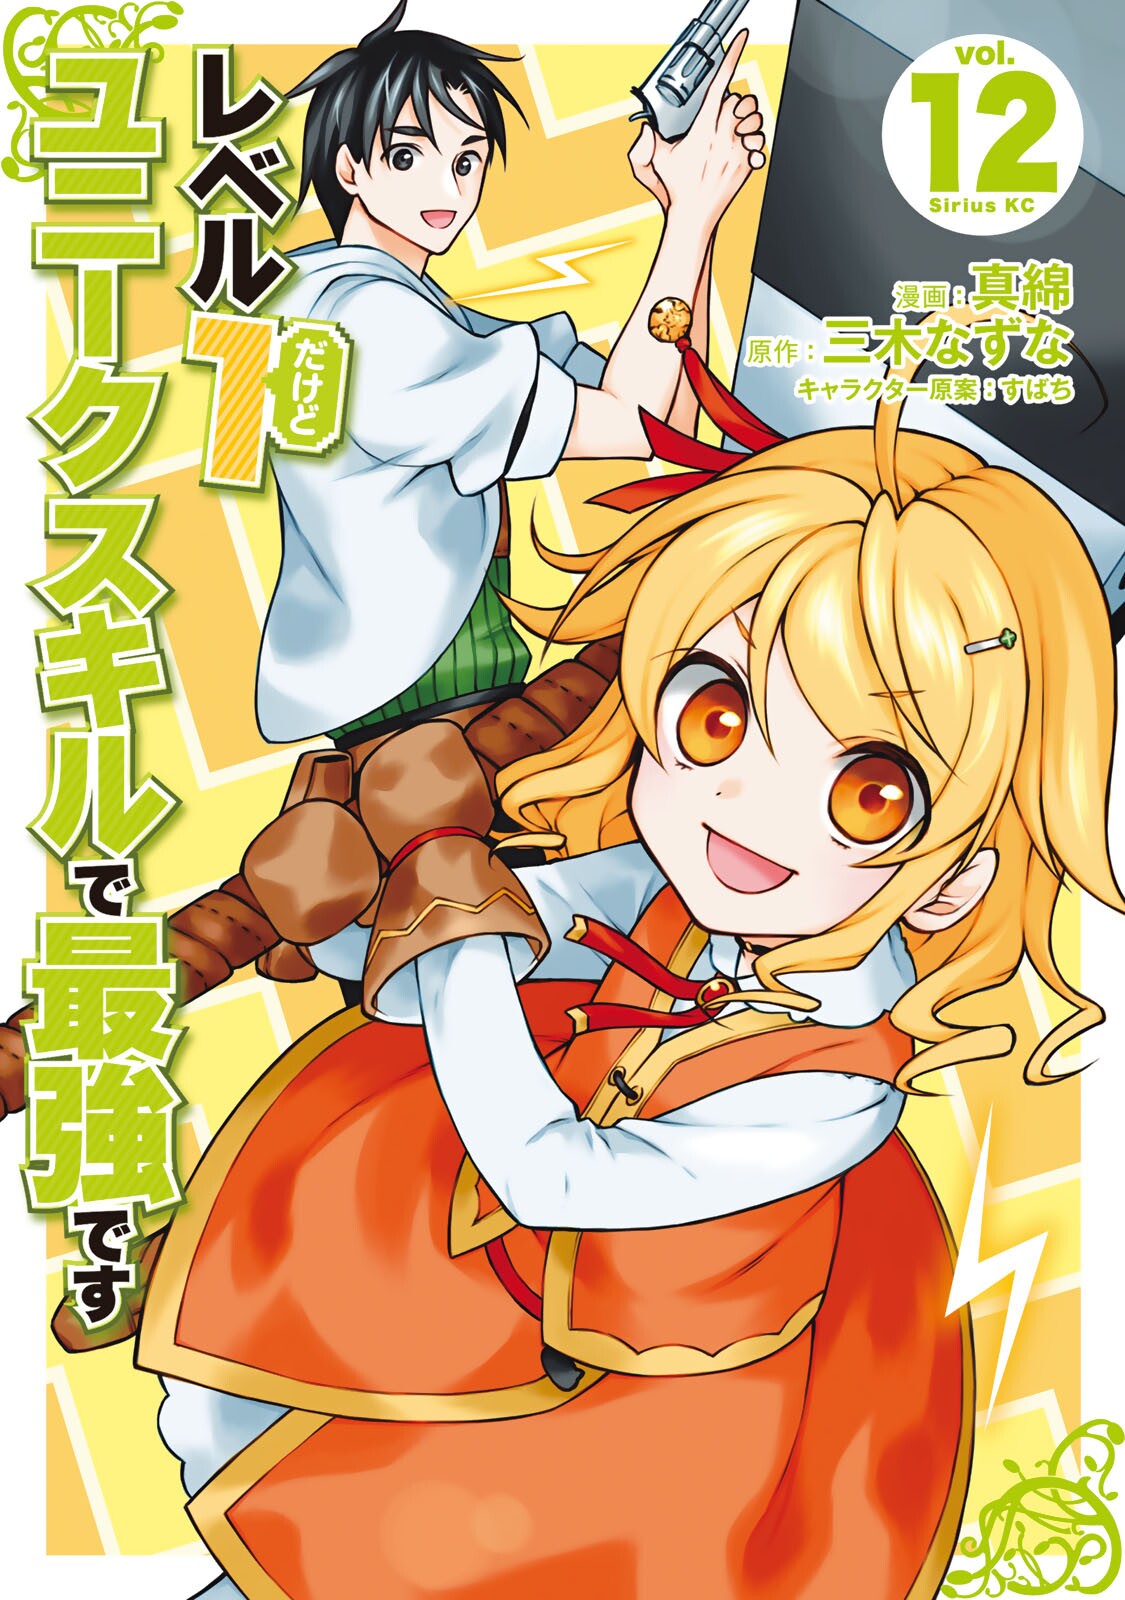 Light Novel Volume 14, Cheat Musou Wiki